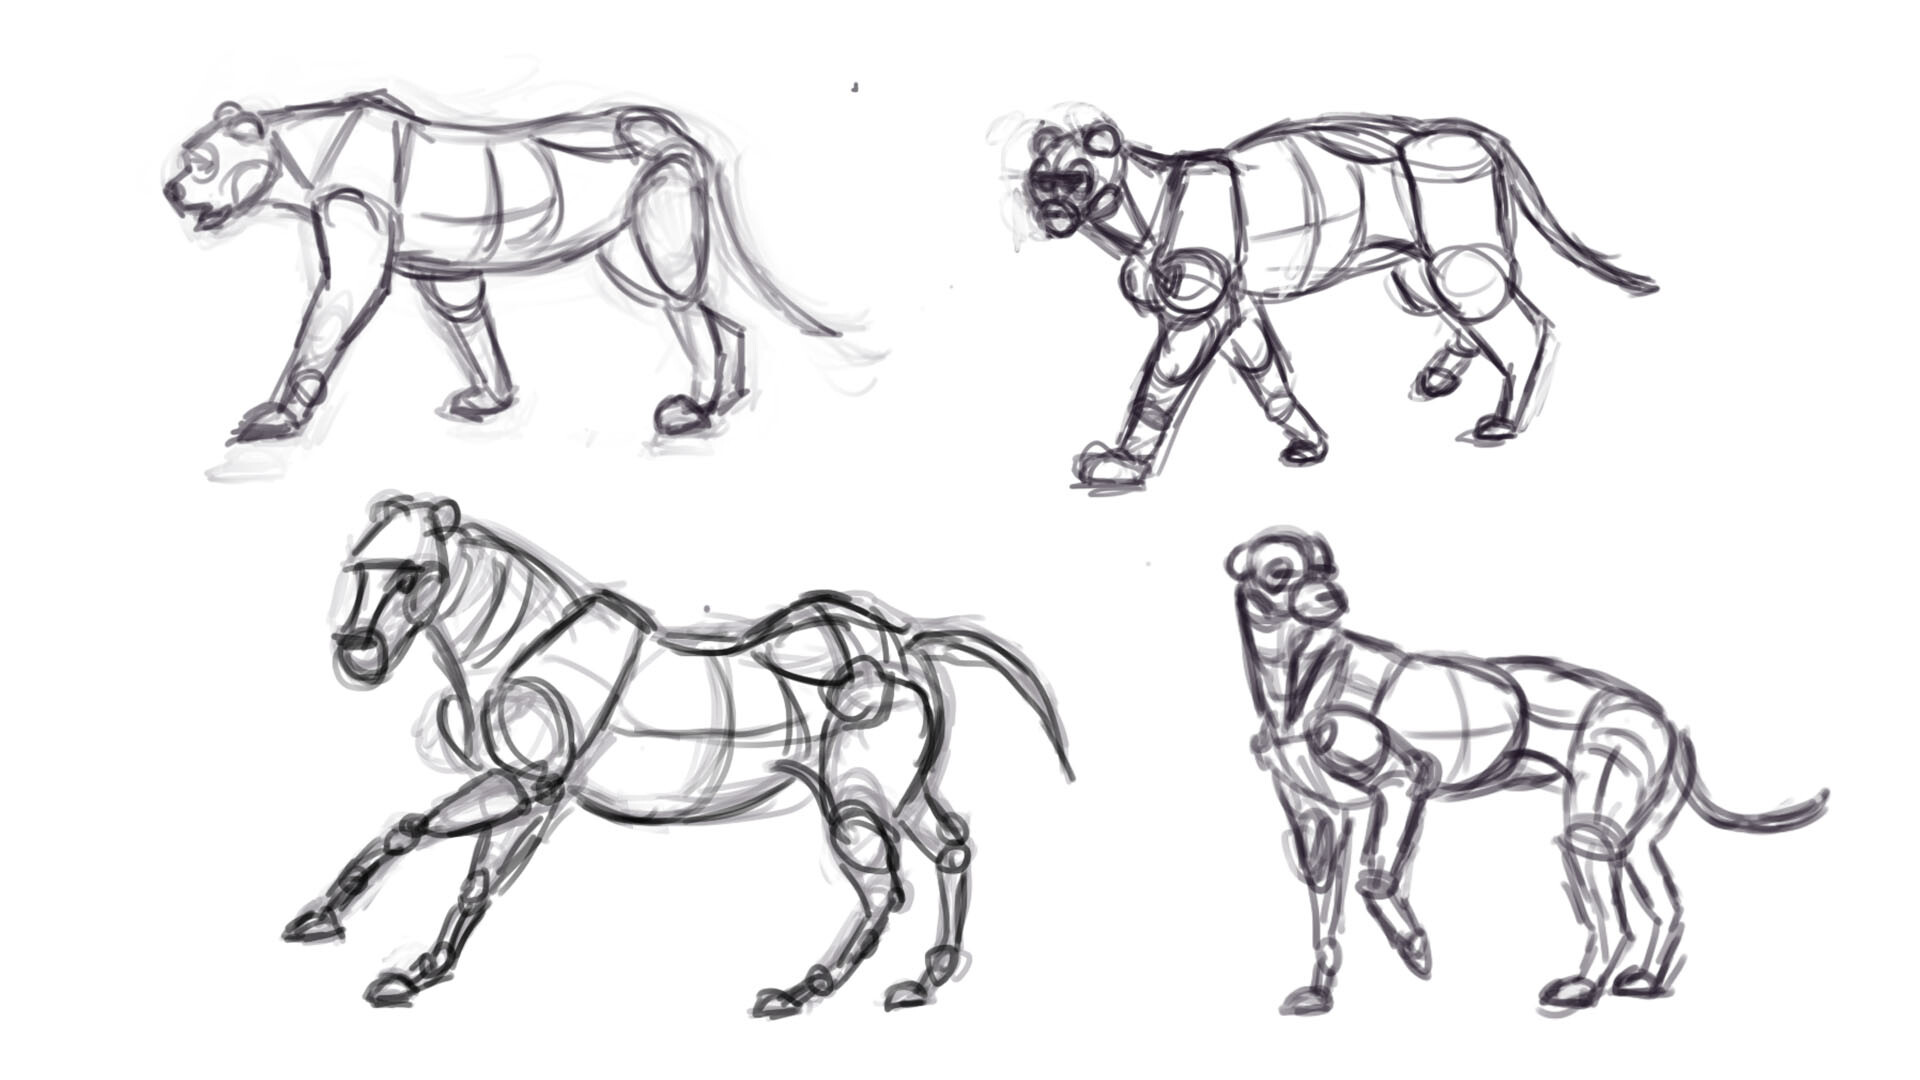 ArtStation - Animal anatomy study drawing.